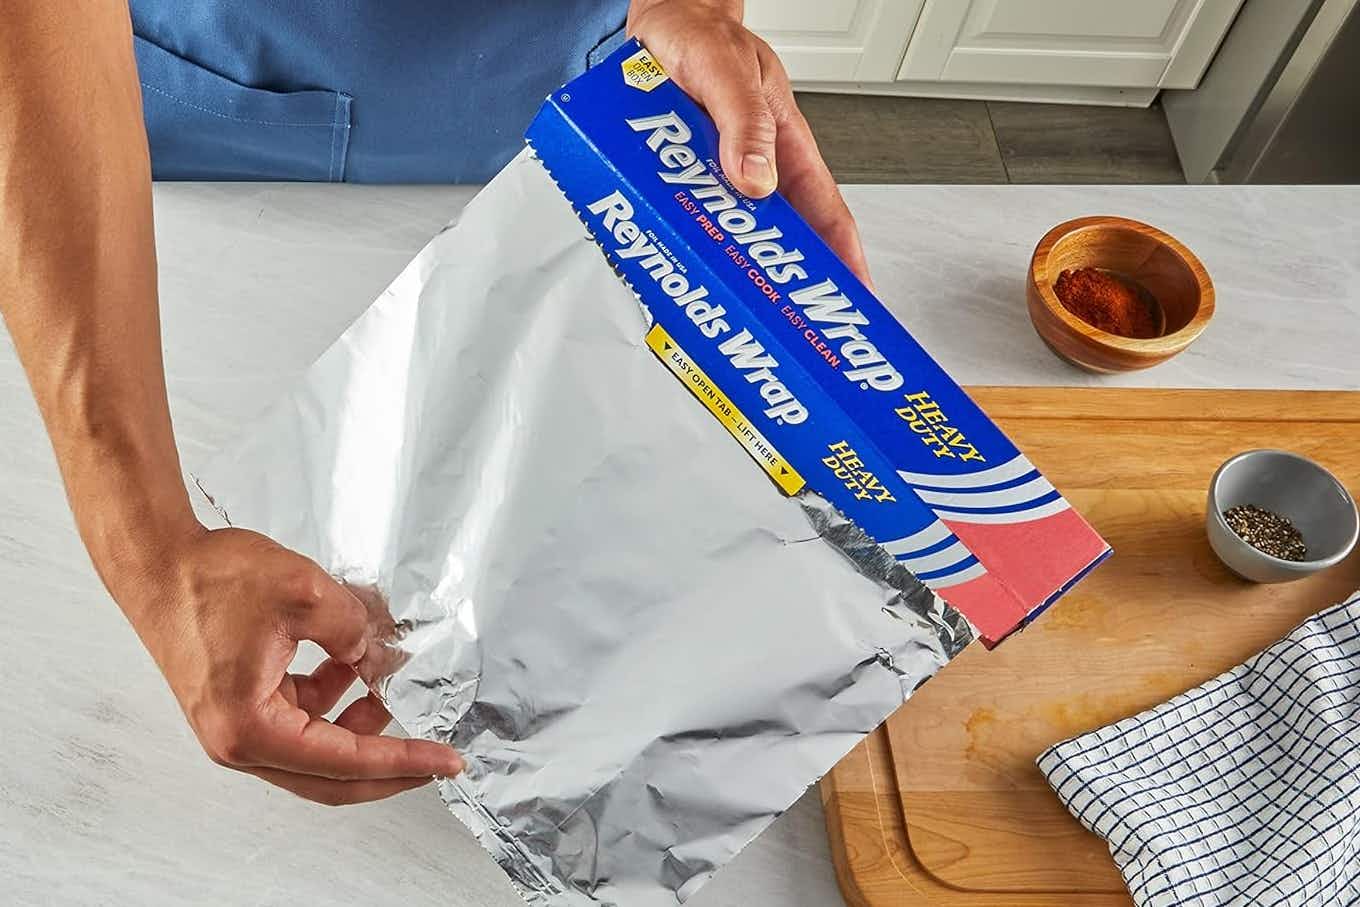 Reynolds Wrap Aluminum Foil, as Low as $2.91 on Amazon (Reg. $7.49)